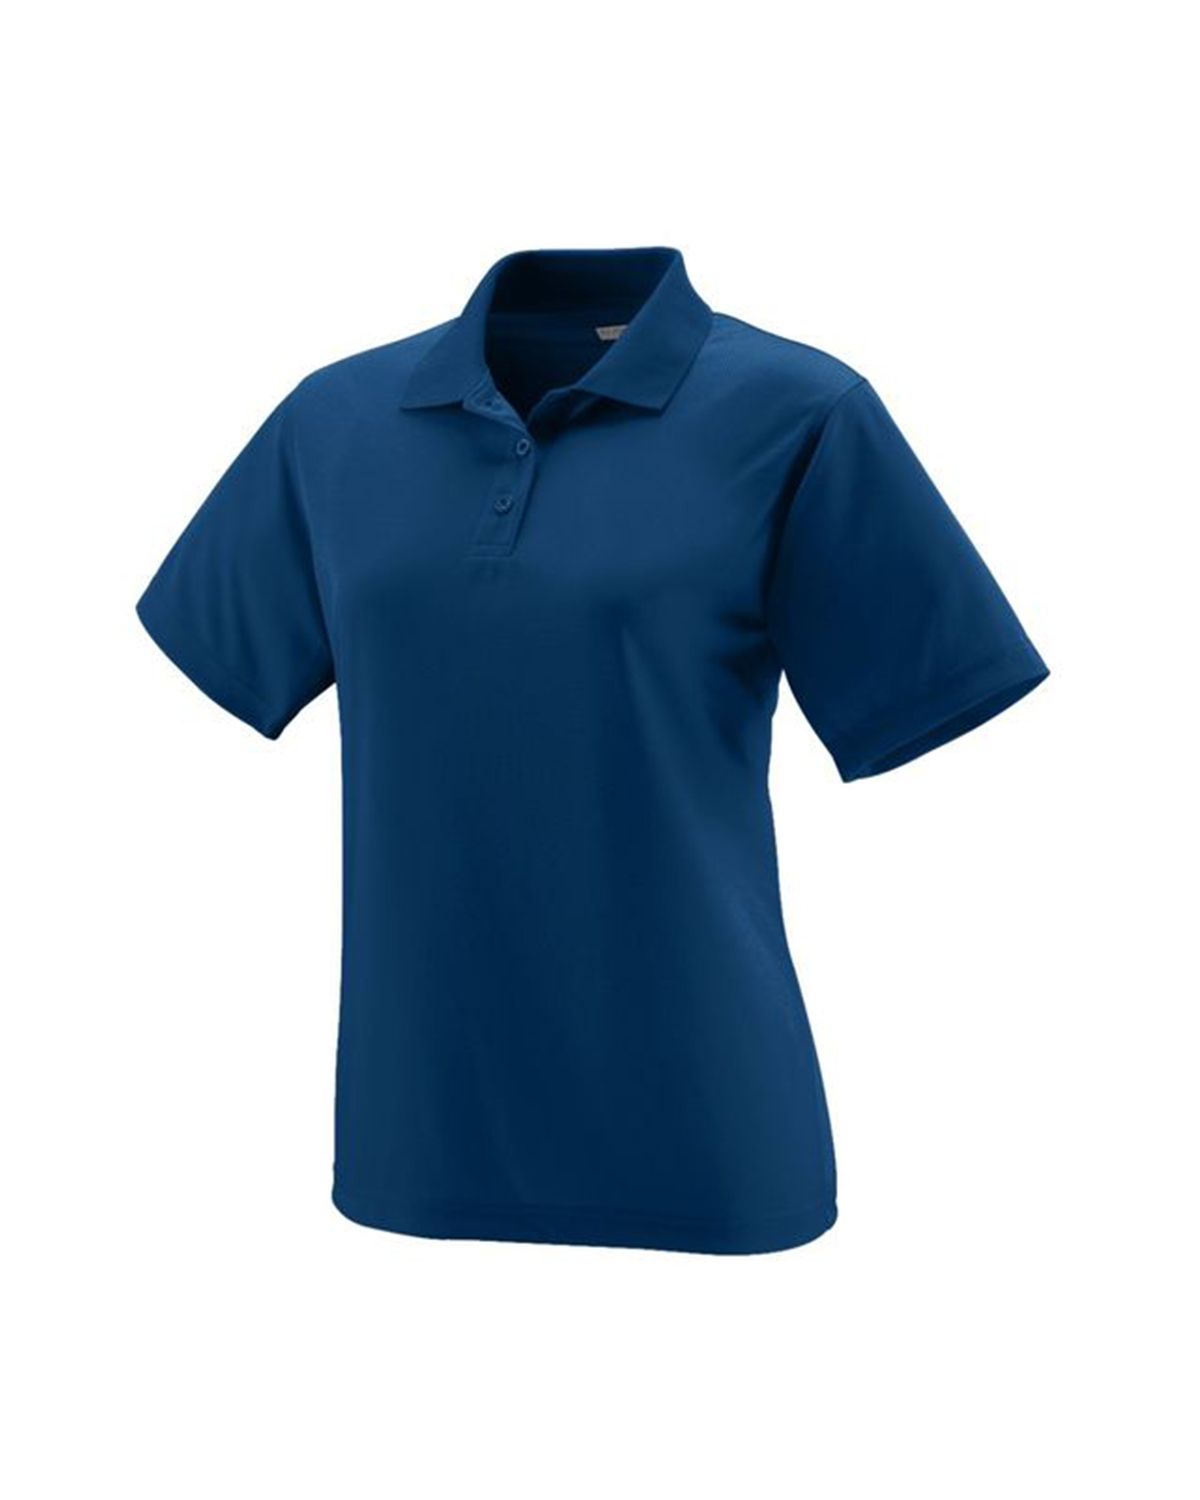 Augusta Sportswear 5097 Ladies Wicking Mesh Sport Shirt